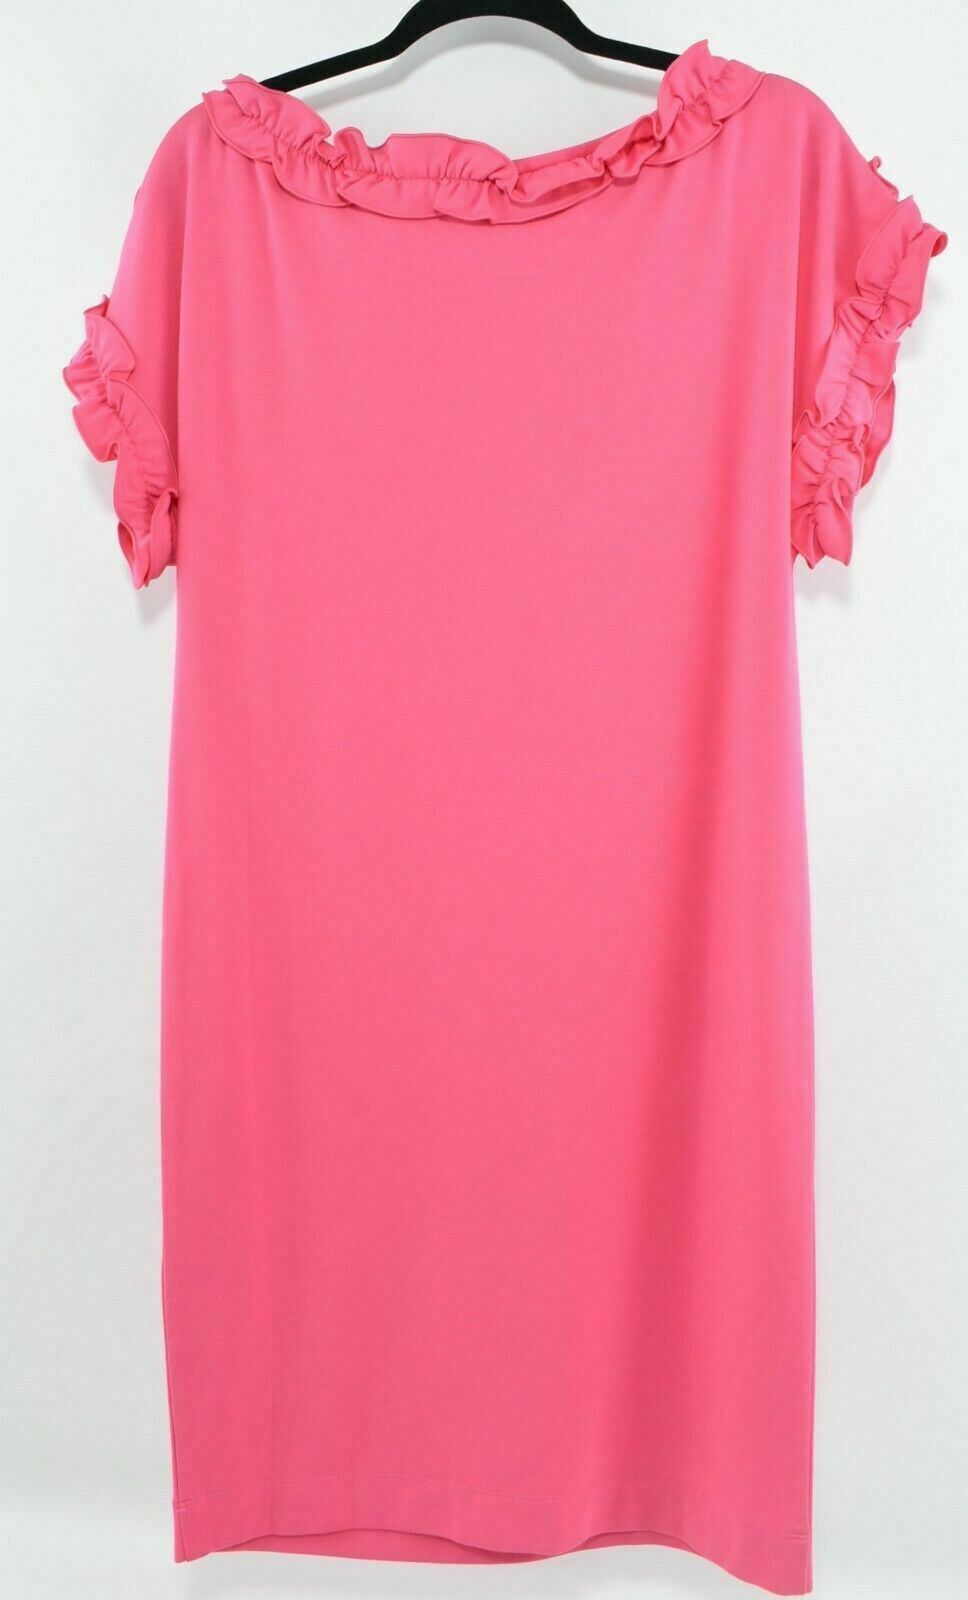 MOSCHINO Women's Pink Shift Dress, Ruffled Neckline & Sleeves, size UK 10